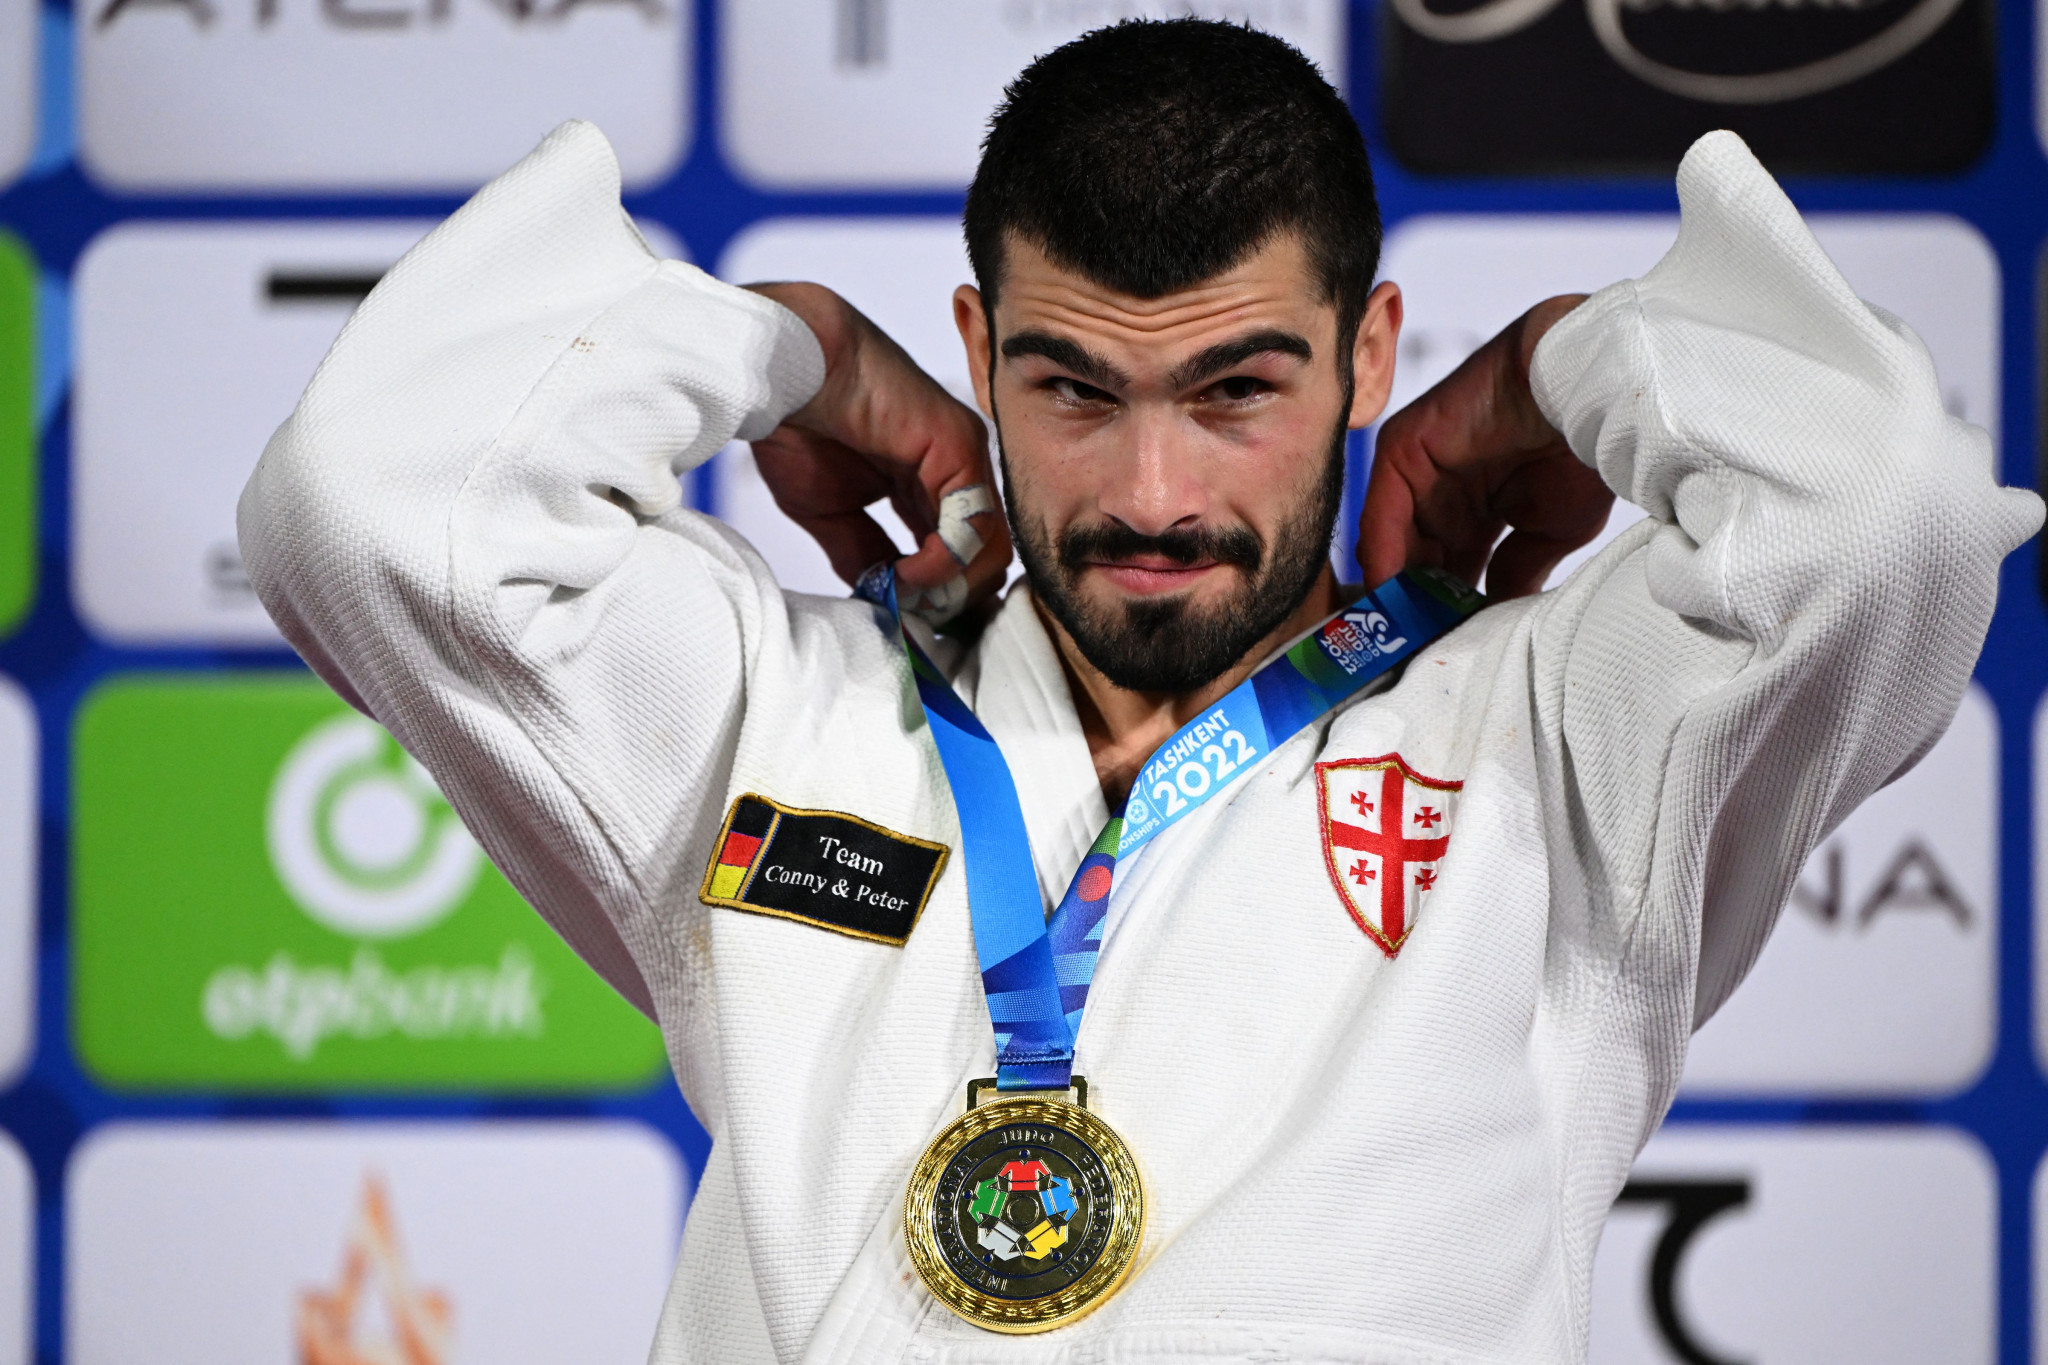 World judo champion Grigalashvili wins Georgian NOC award